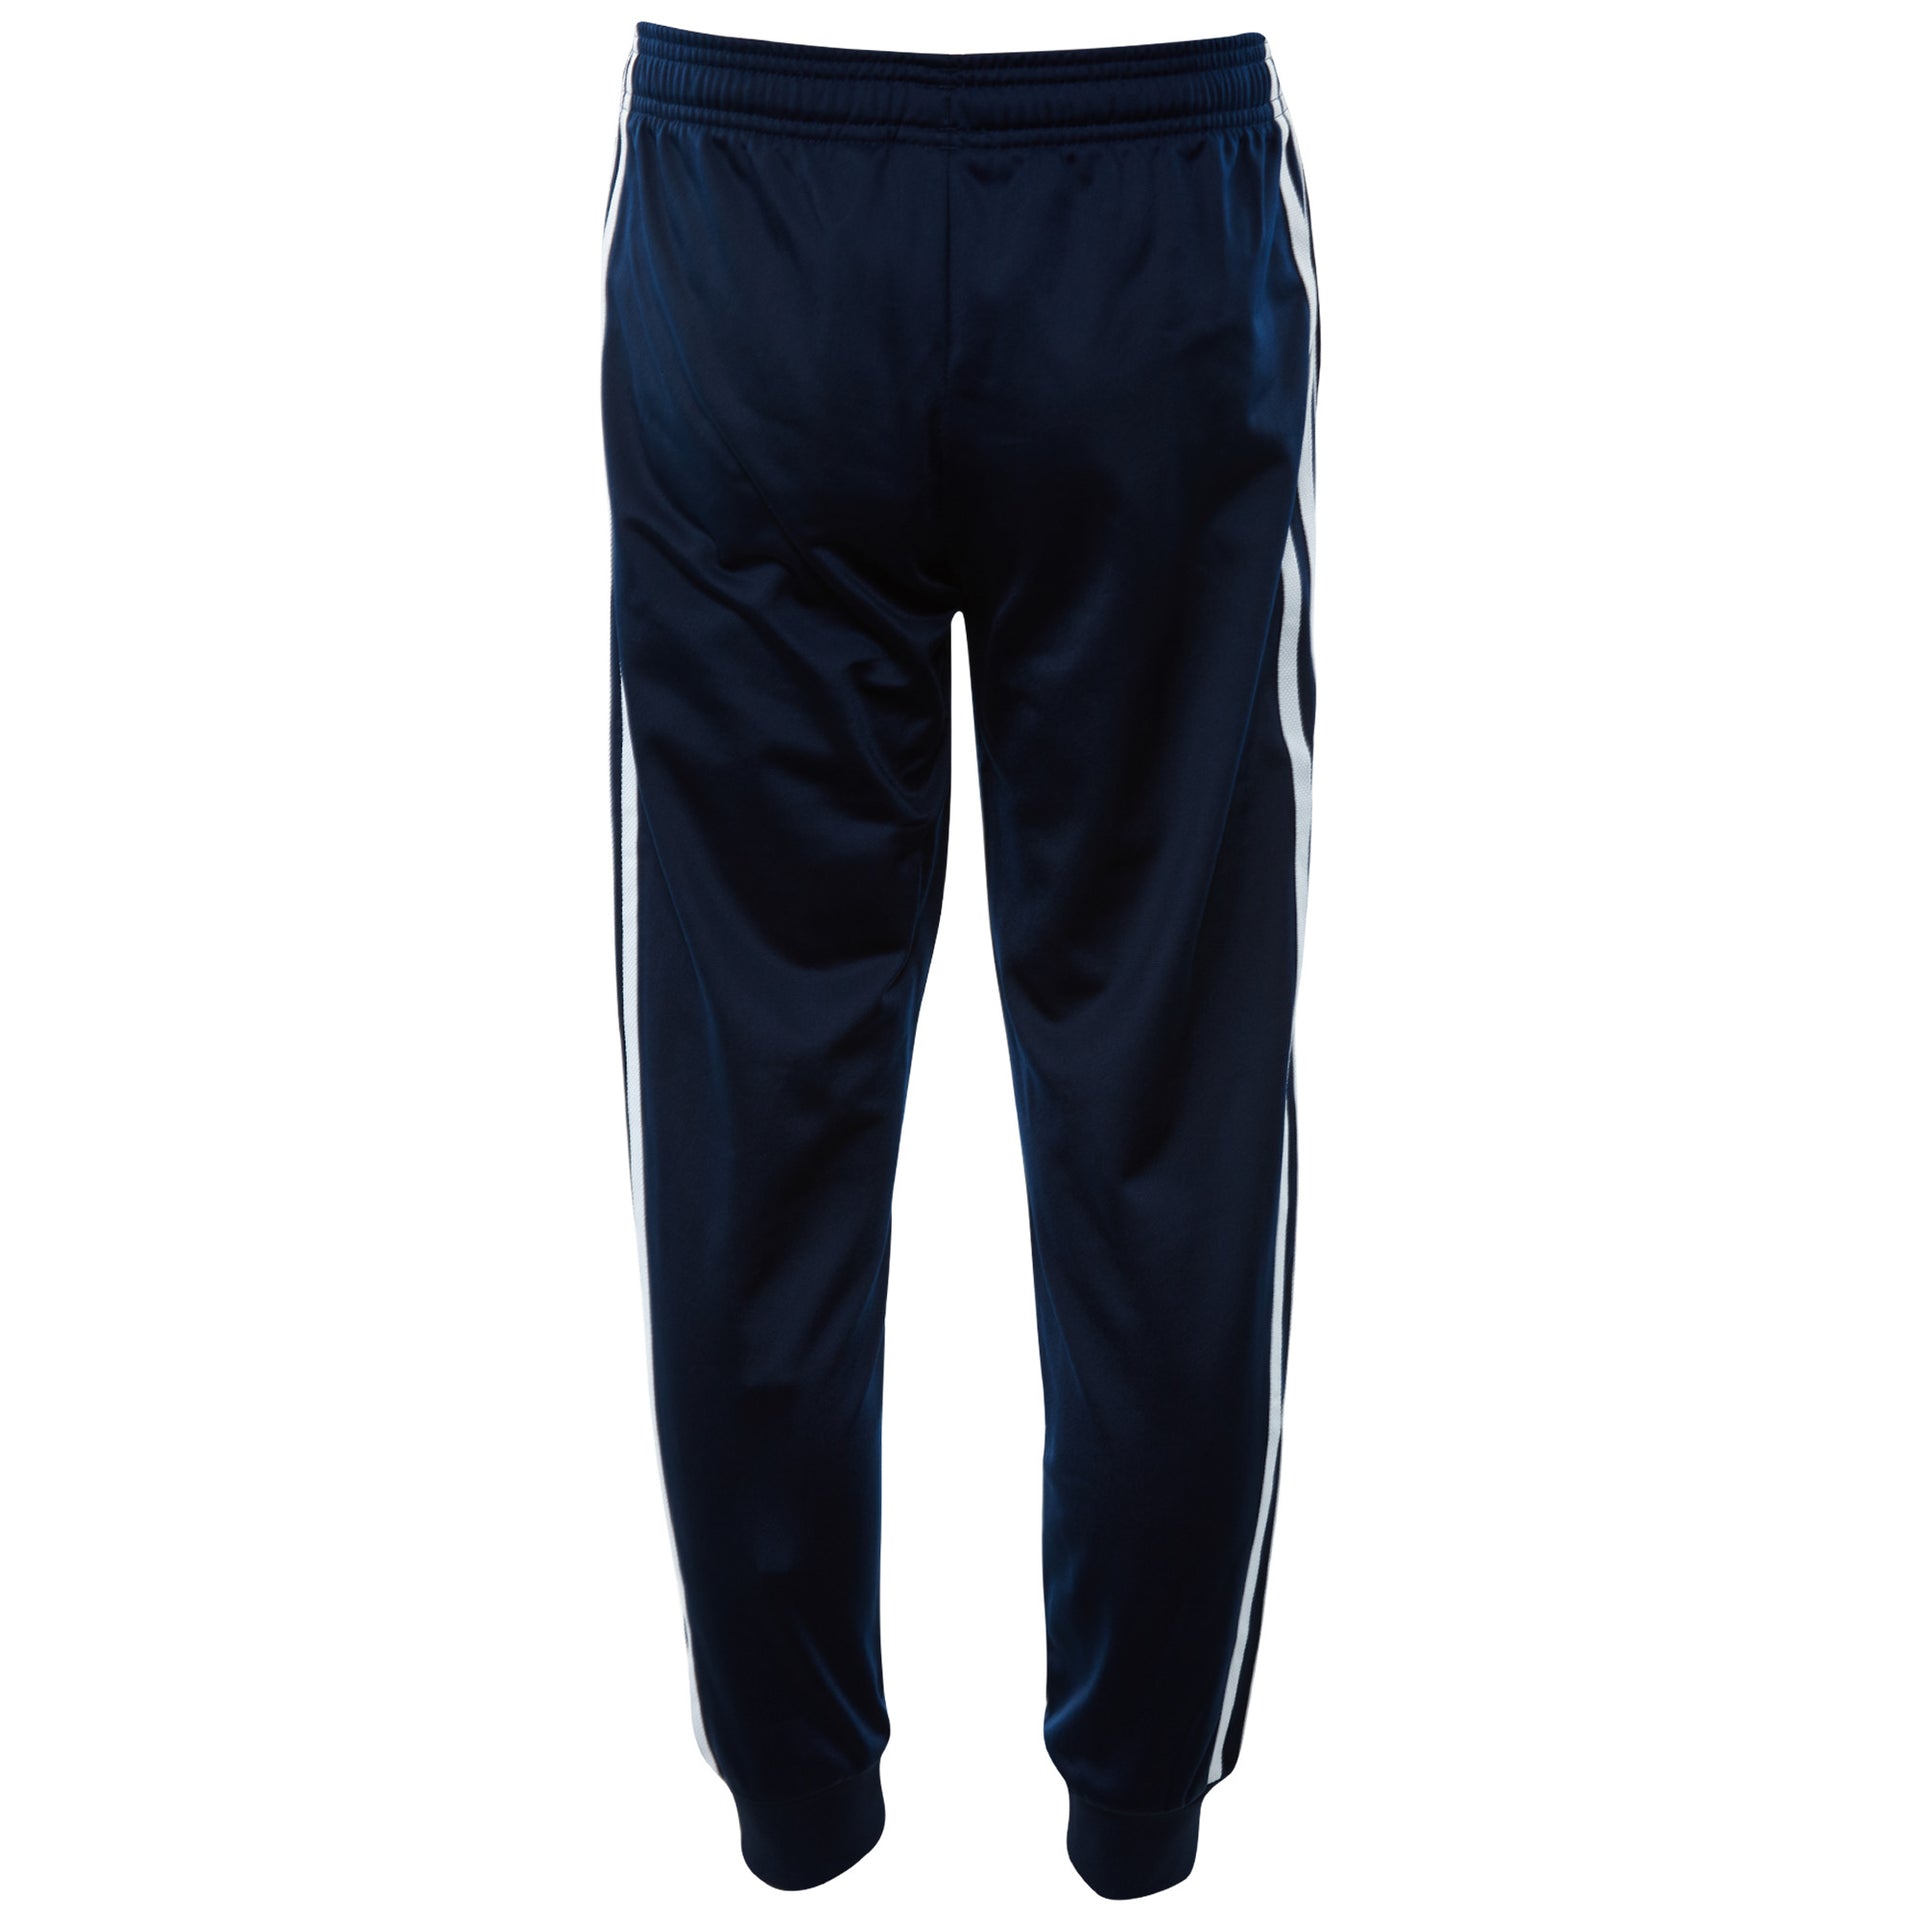 Adidas Sst Pants Big Kids Style : Cf8563-CONAVY